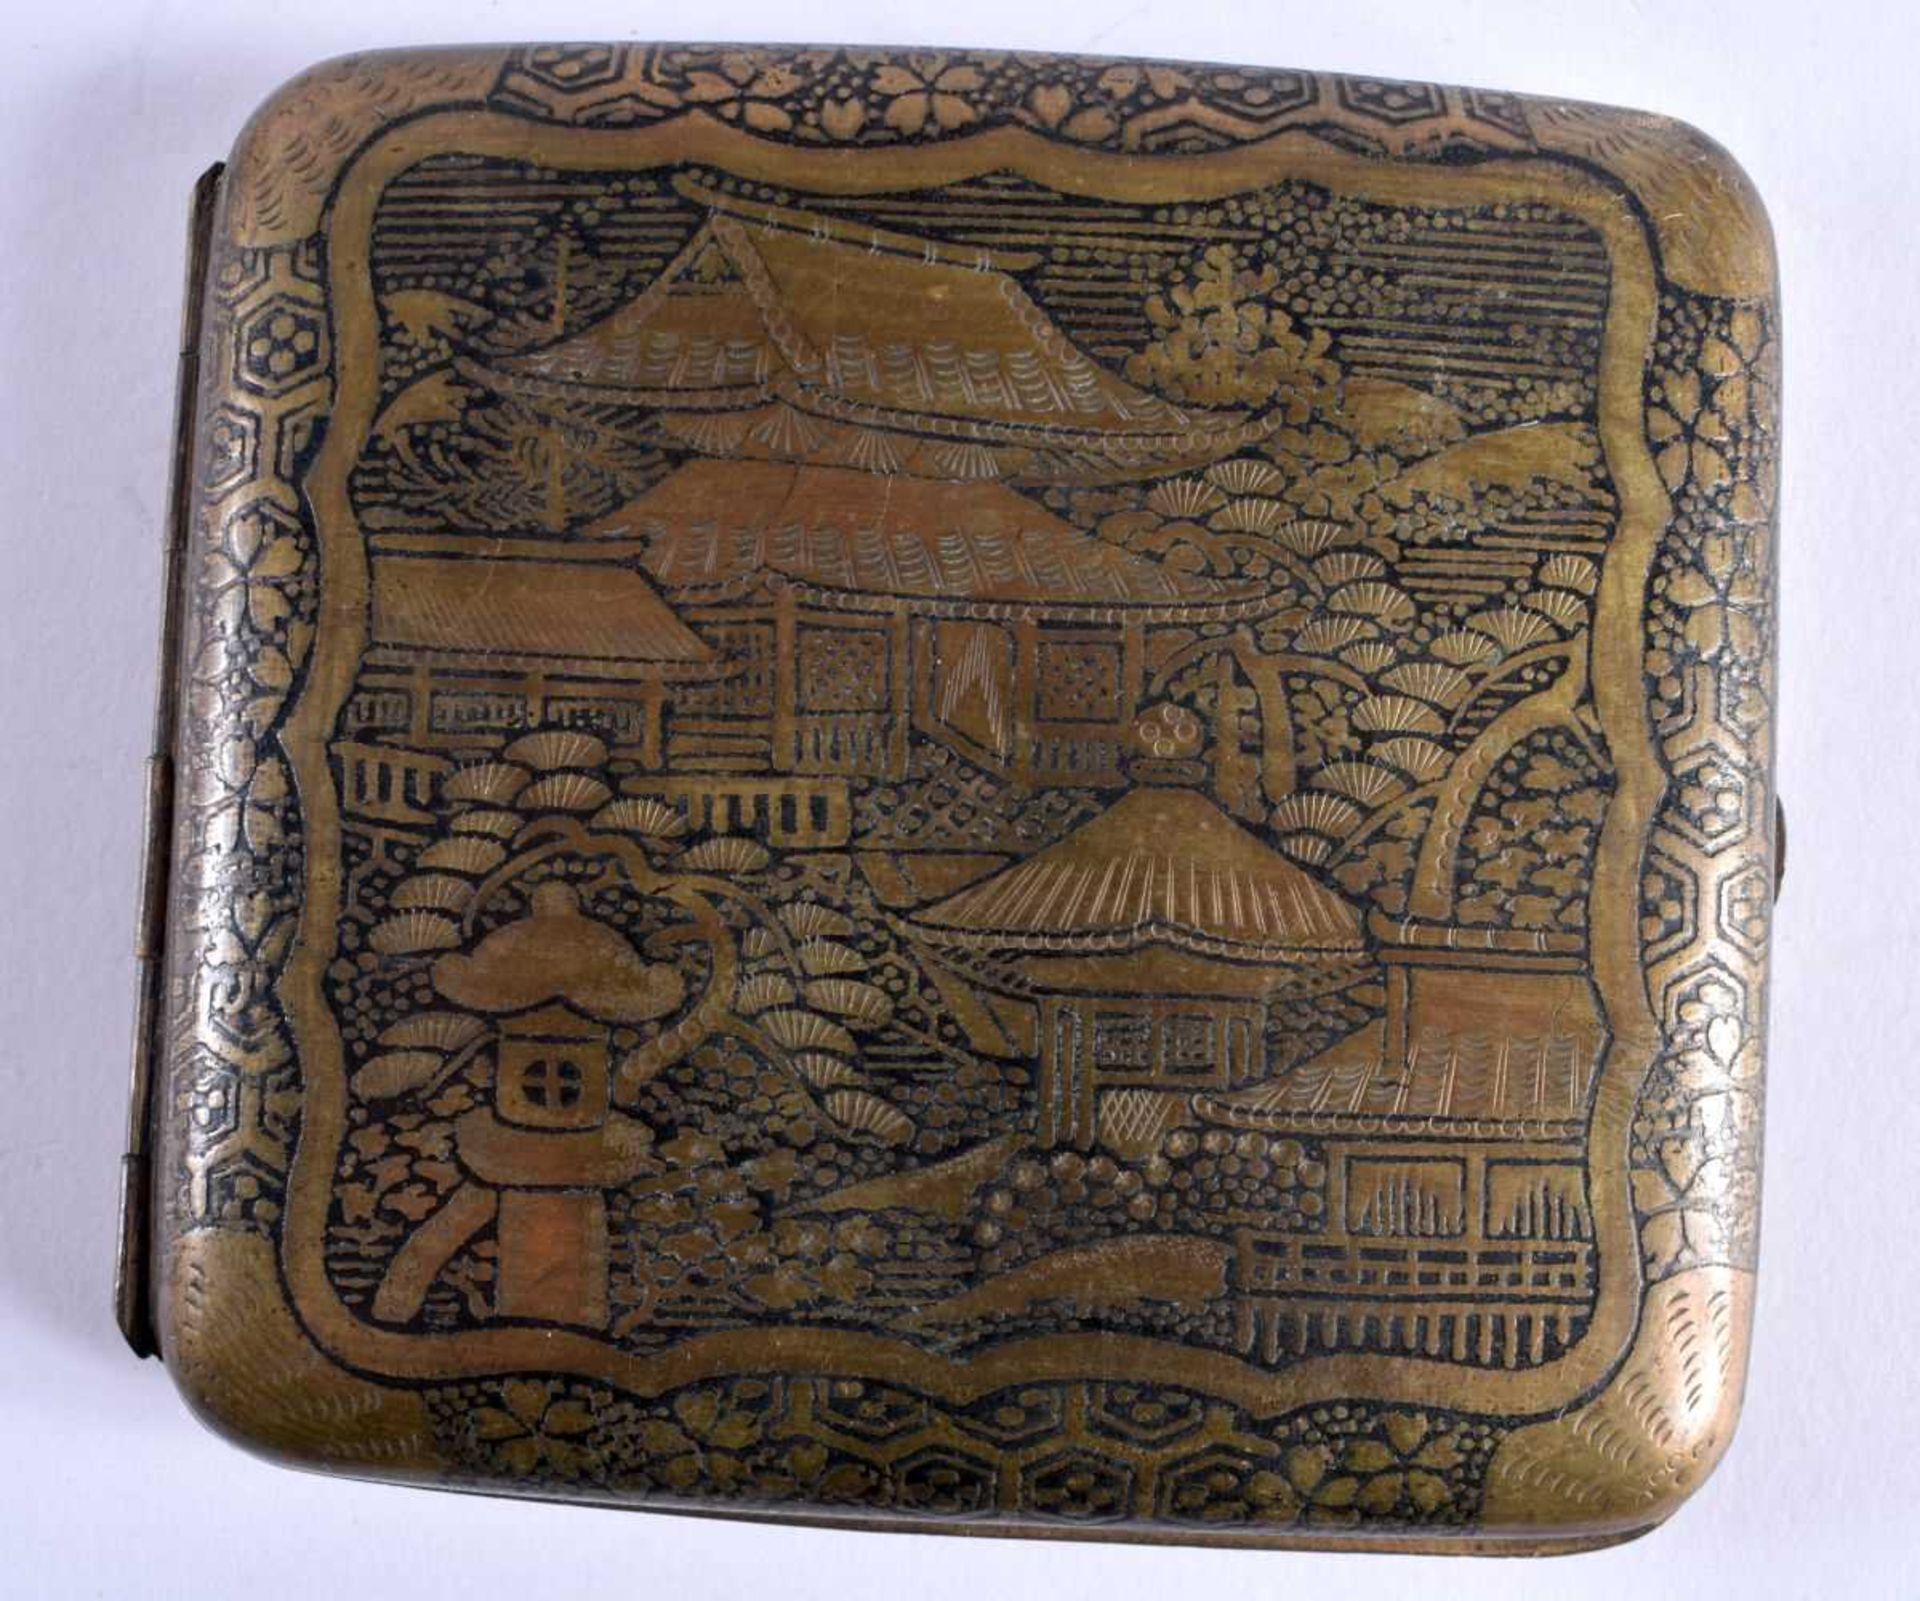 A LATE 19TH CENTURY JAPANESE MEIJI PERIOD KOMAI STYLE CASE. 84.4 grams. 9 cm square.